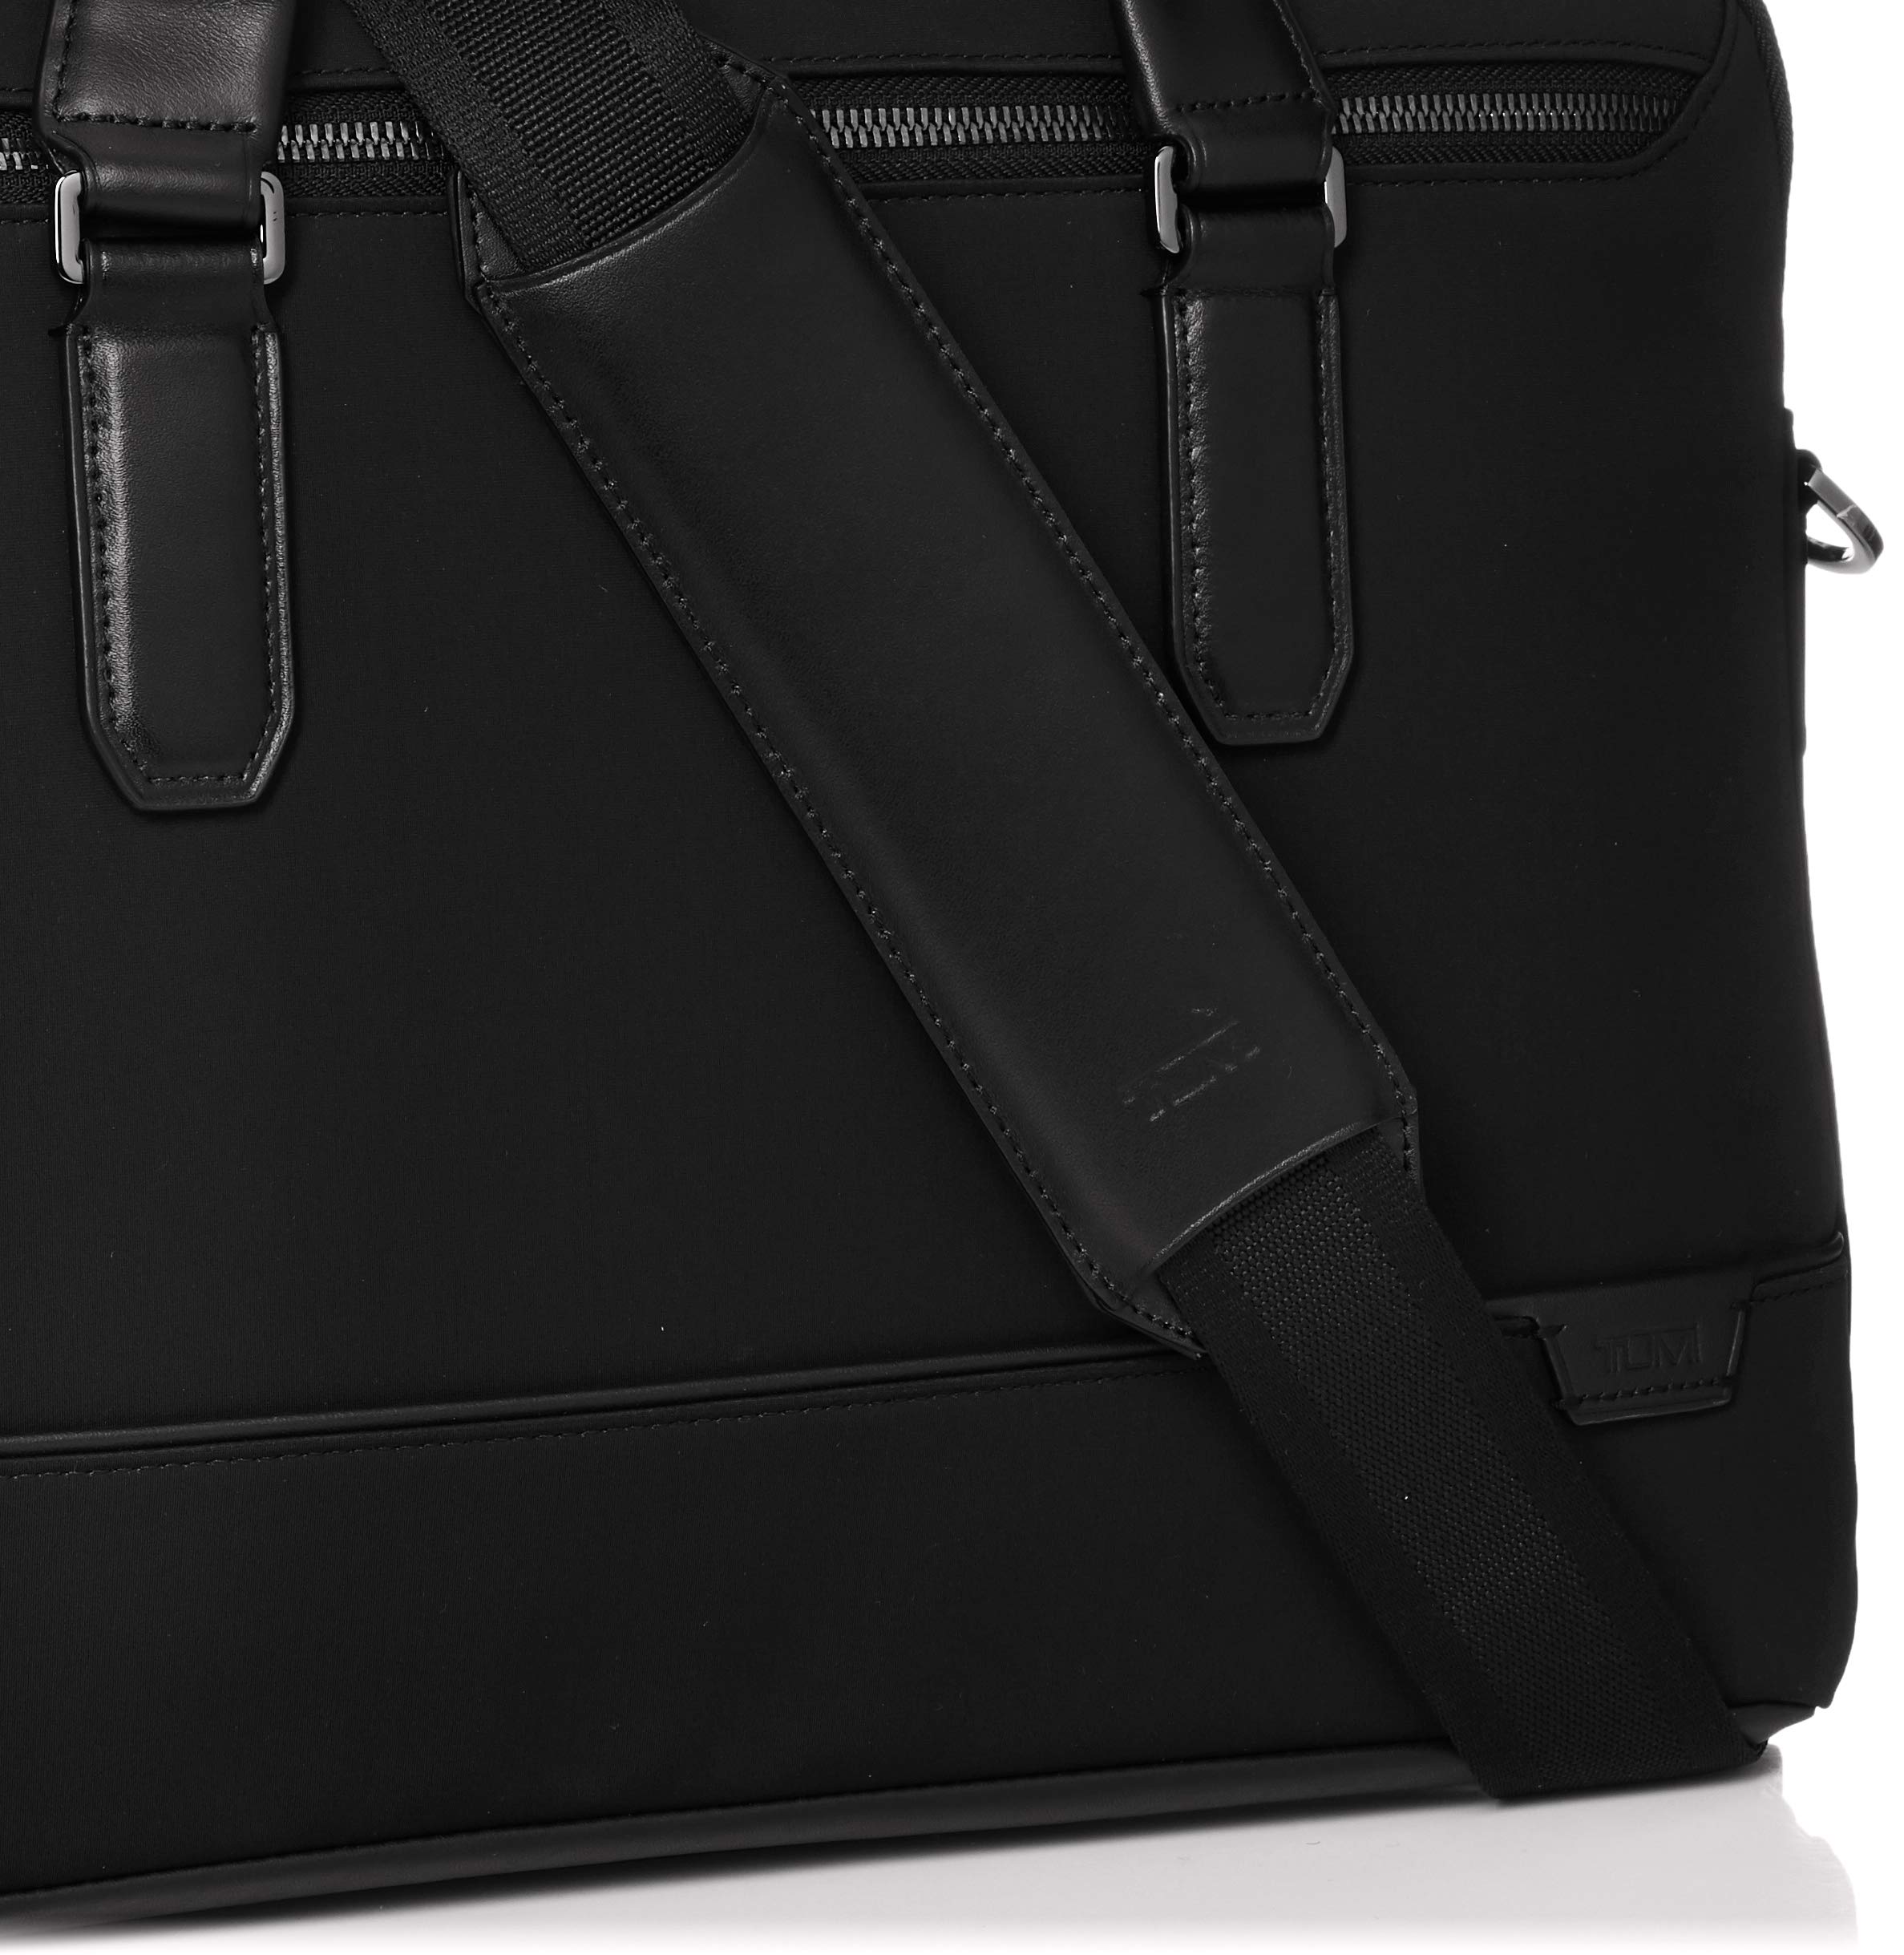 TUMI - Harrison Sycamore Slim Top Zip Briefcase - 15 Inch Computer Bag for Women